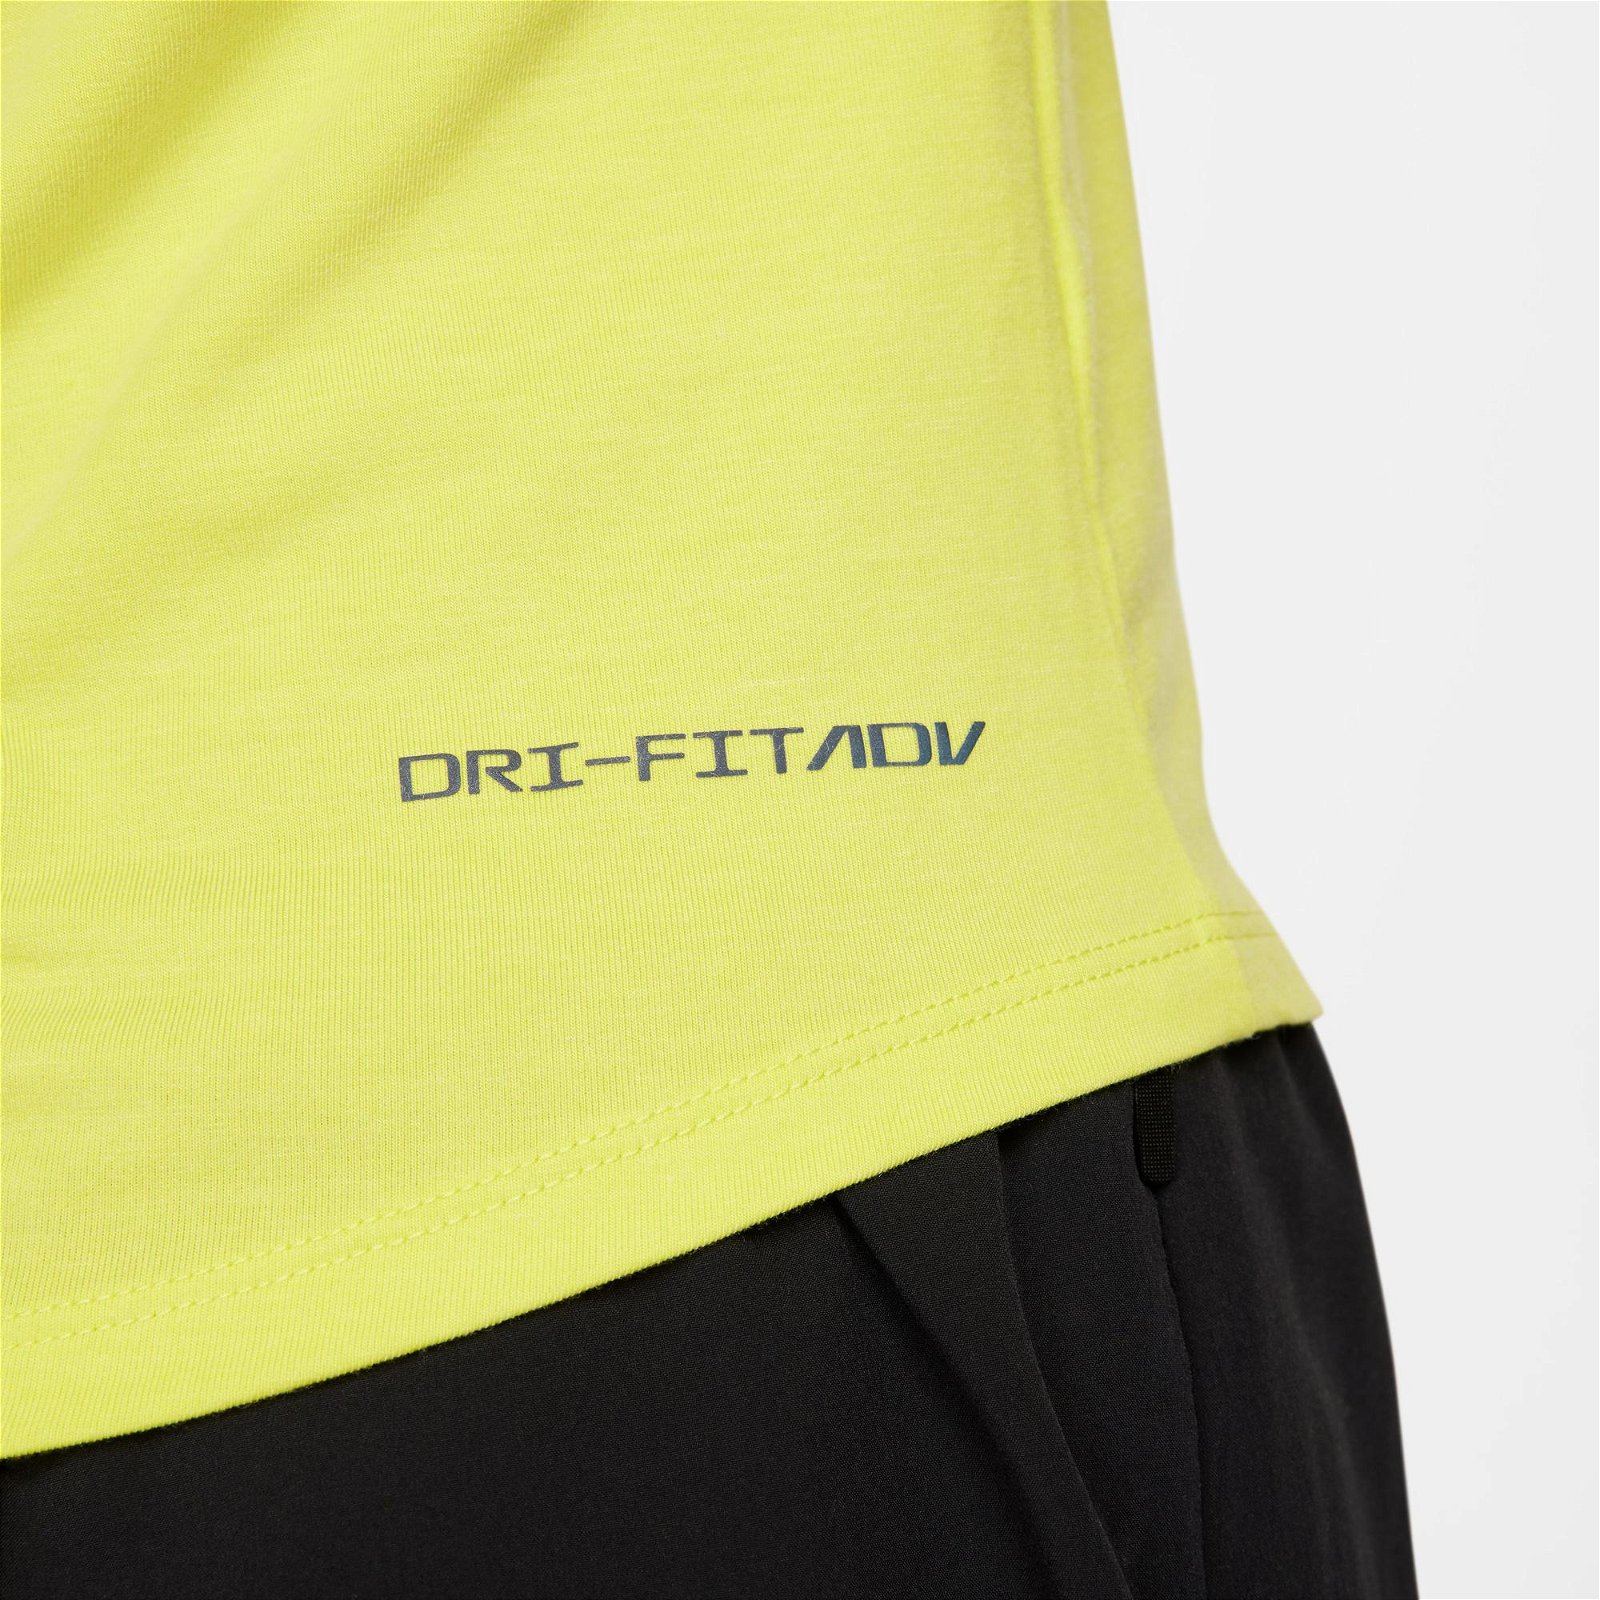 Nike Dri-FIT Adventure Running Division Kadın Yeşil Uzun Kollu T-Shirt